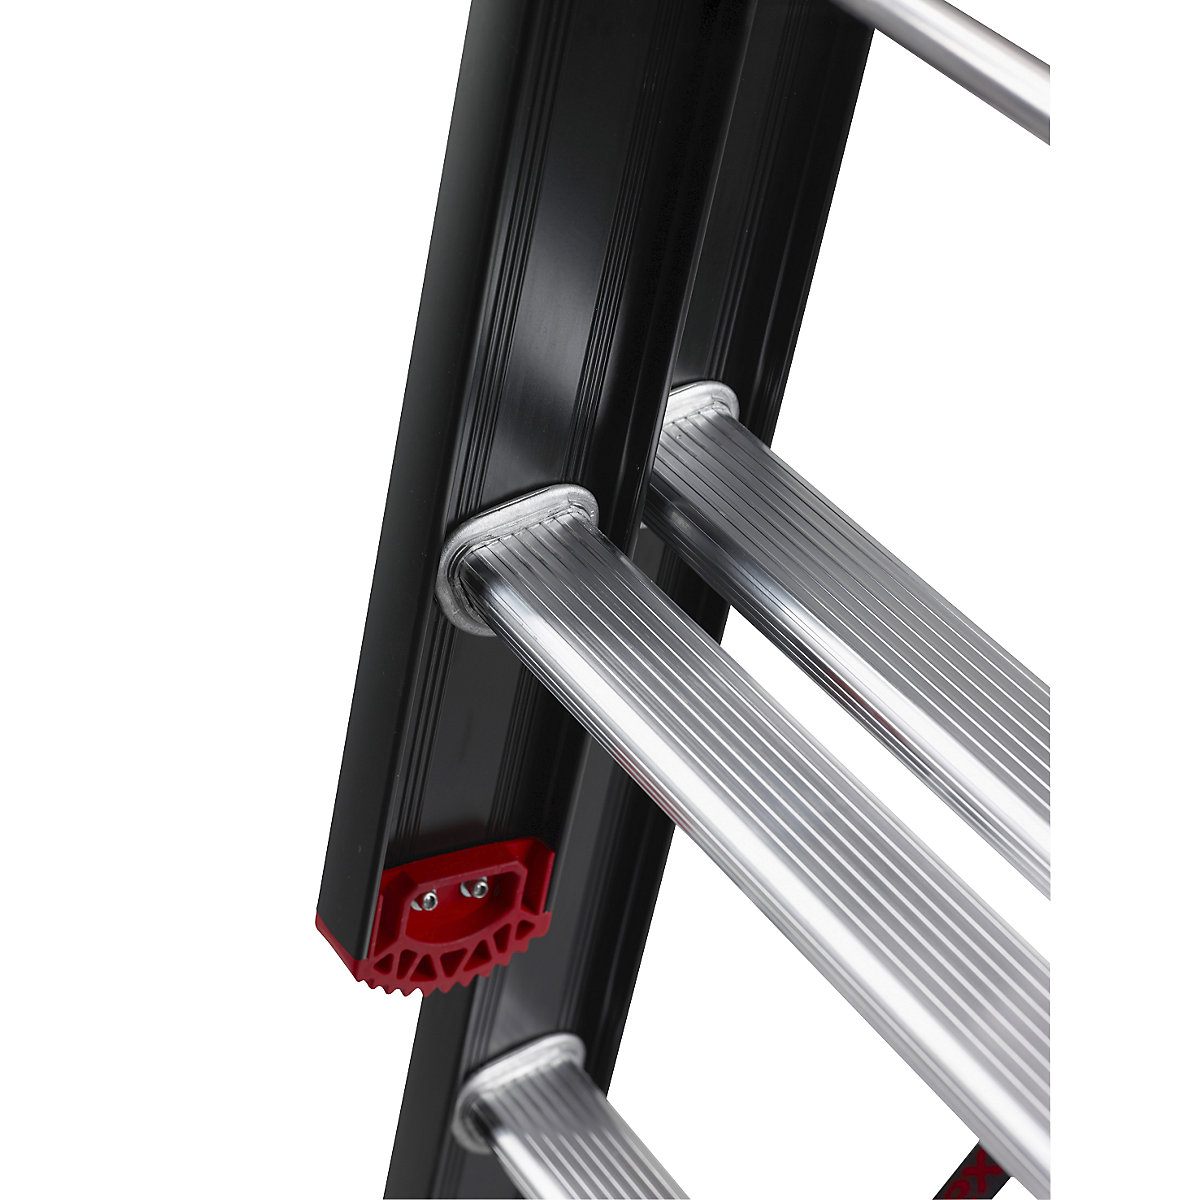 Escalera multiusos, revestida de aluminio – Altrex (Imagen del producto 12)-11